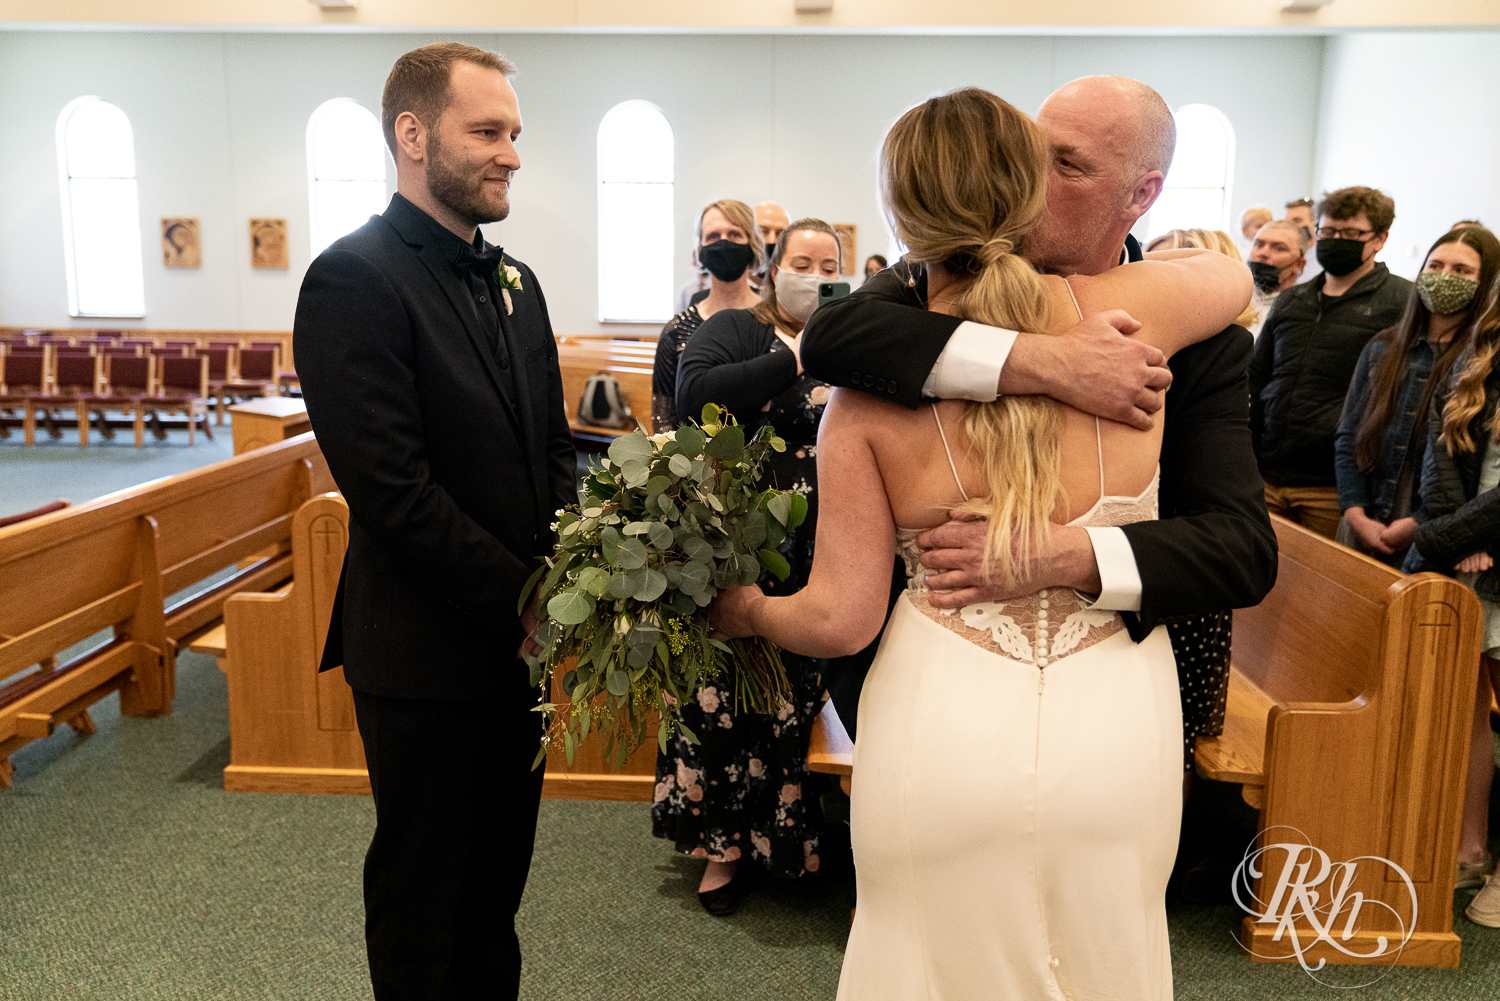 Dad hugs bride at the alter in church wedding ceremony in Faribault, Minnesota.